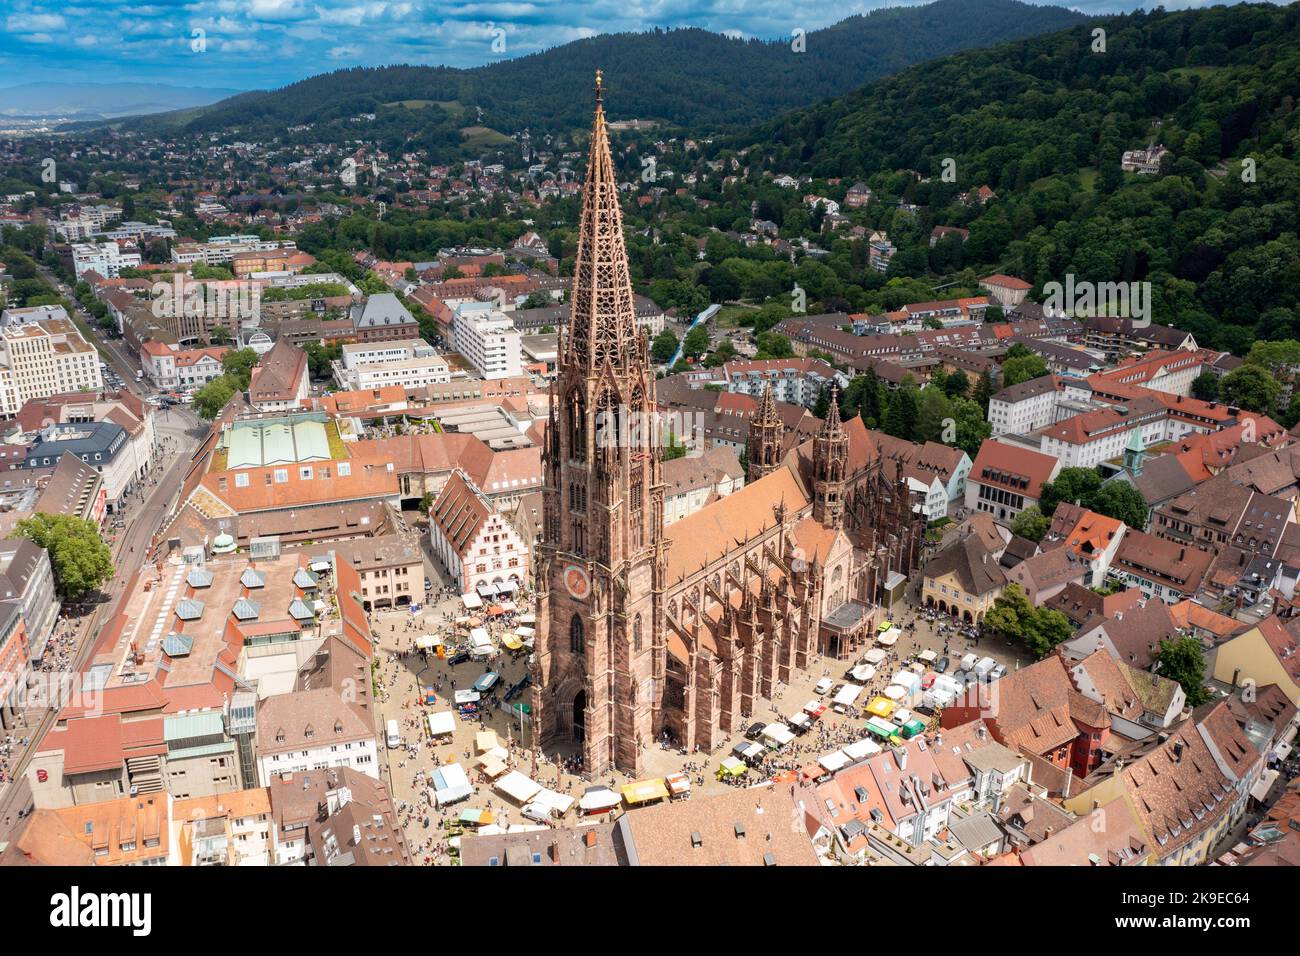 Freiburger Münster oder Freiburger Dom oder Freiburger Münster, Freiburg im Breisgau, Deutschland Stockfoto